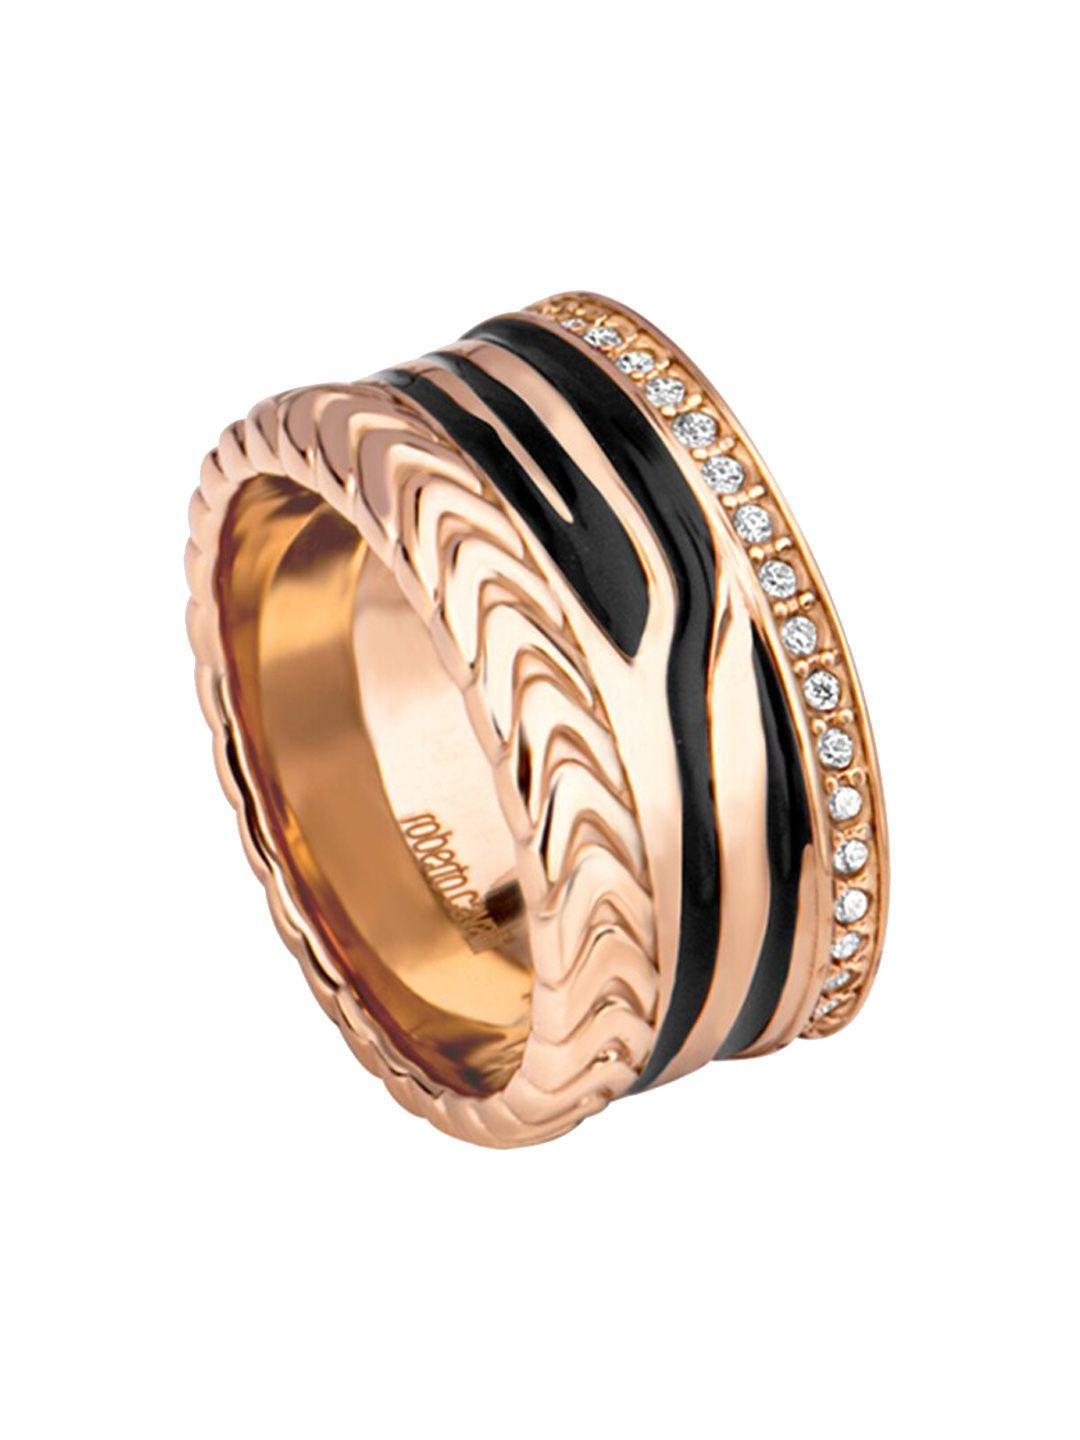 roberto cavalli rose gold-plated stone-studded finger ring